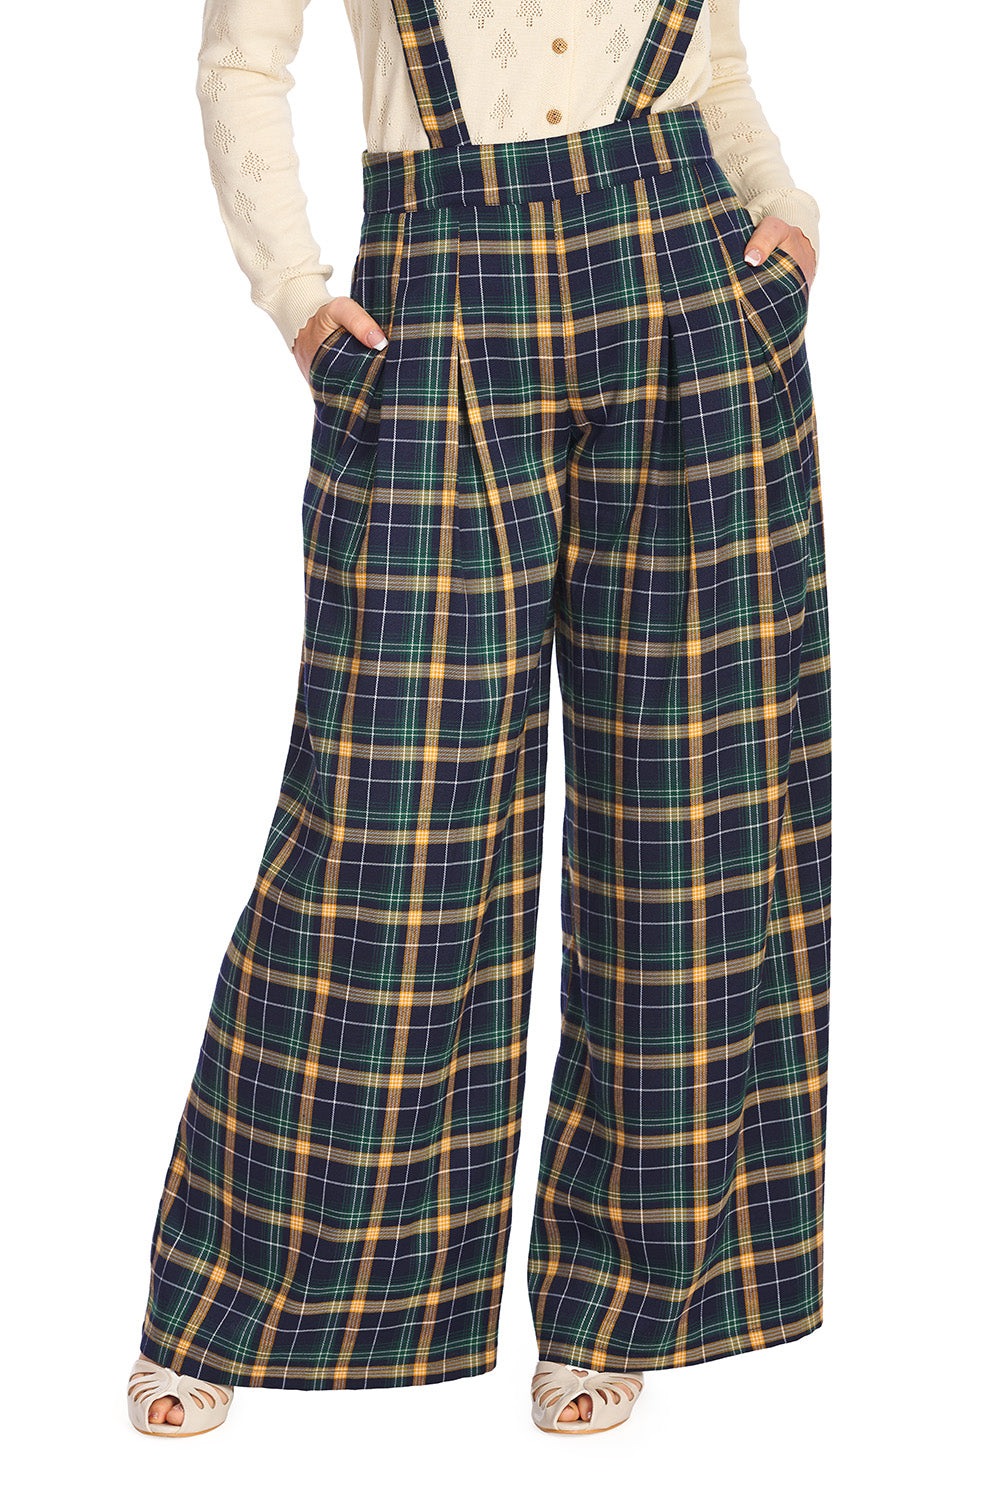 Sweet Joy 40s Style Trouser by Banned